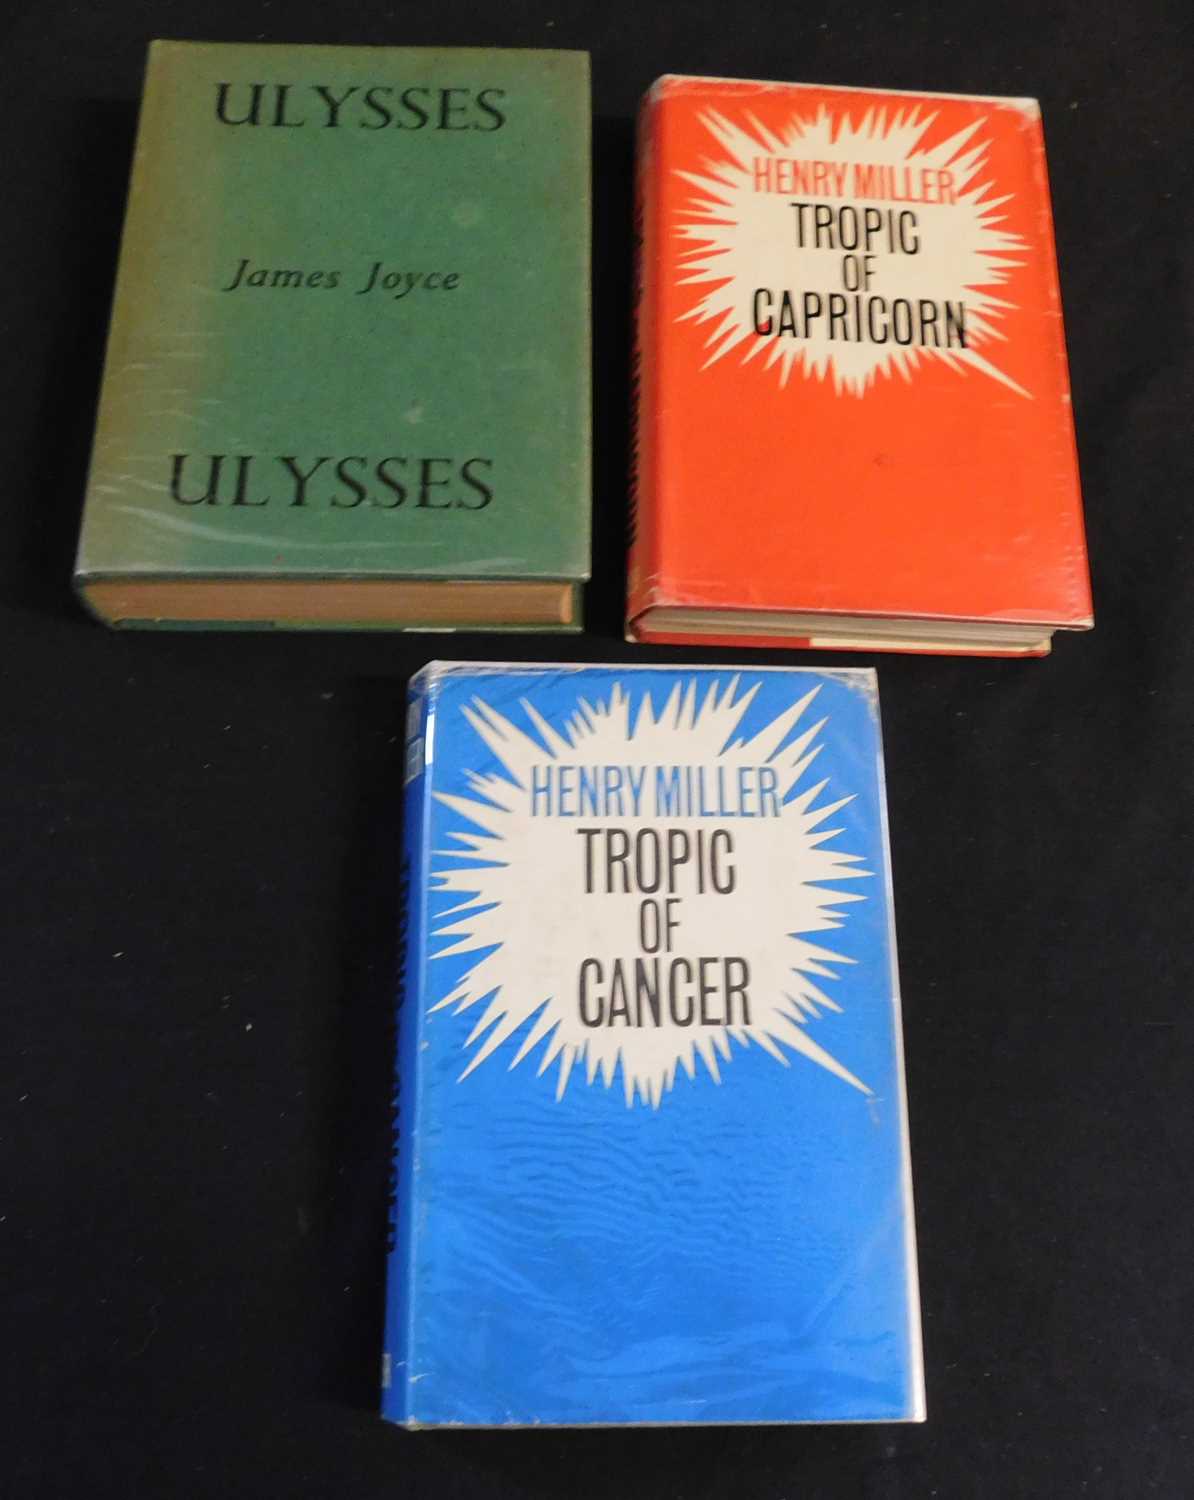 JAMES JOYCE: ULYSSES, London, The Bodley Head, 1958, original cloth, d/w + HENRY MILLER: TROPIC OF